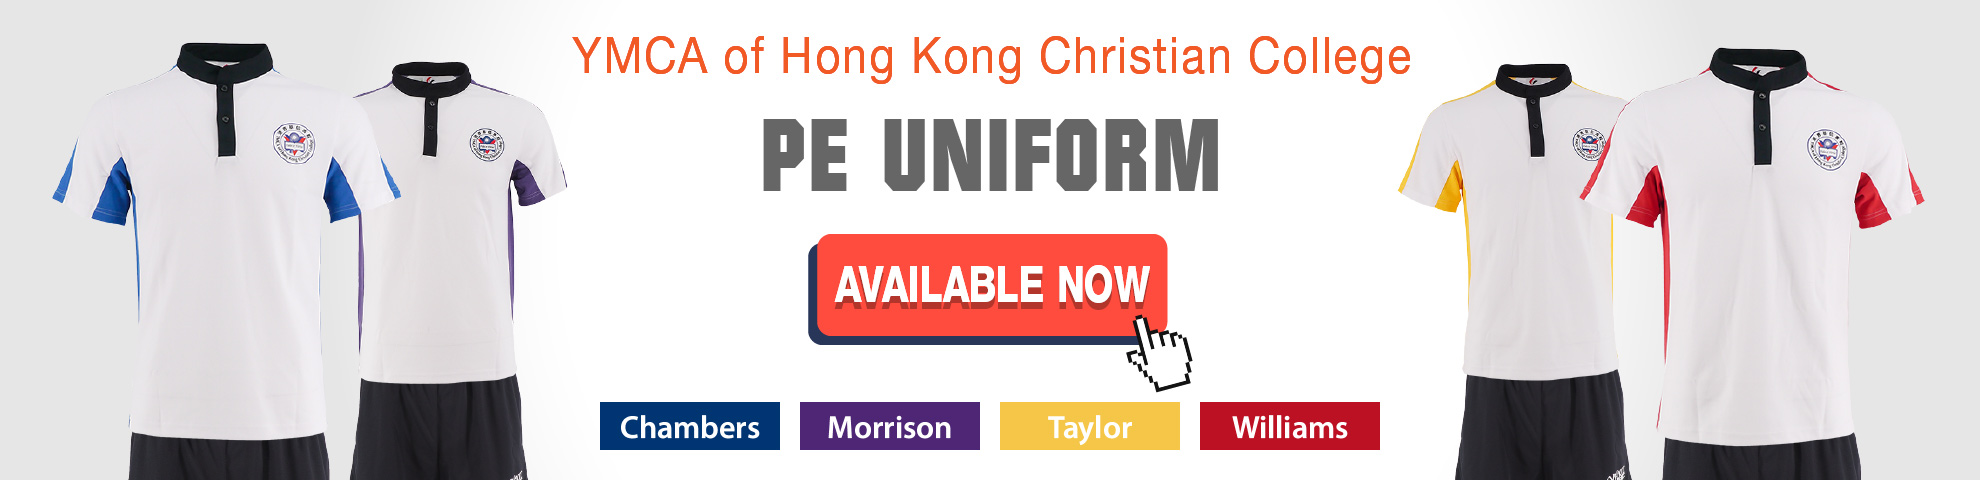 YMCA of Hong Kong Christian College PE Uniform - Order Now